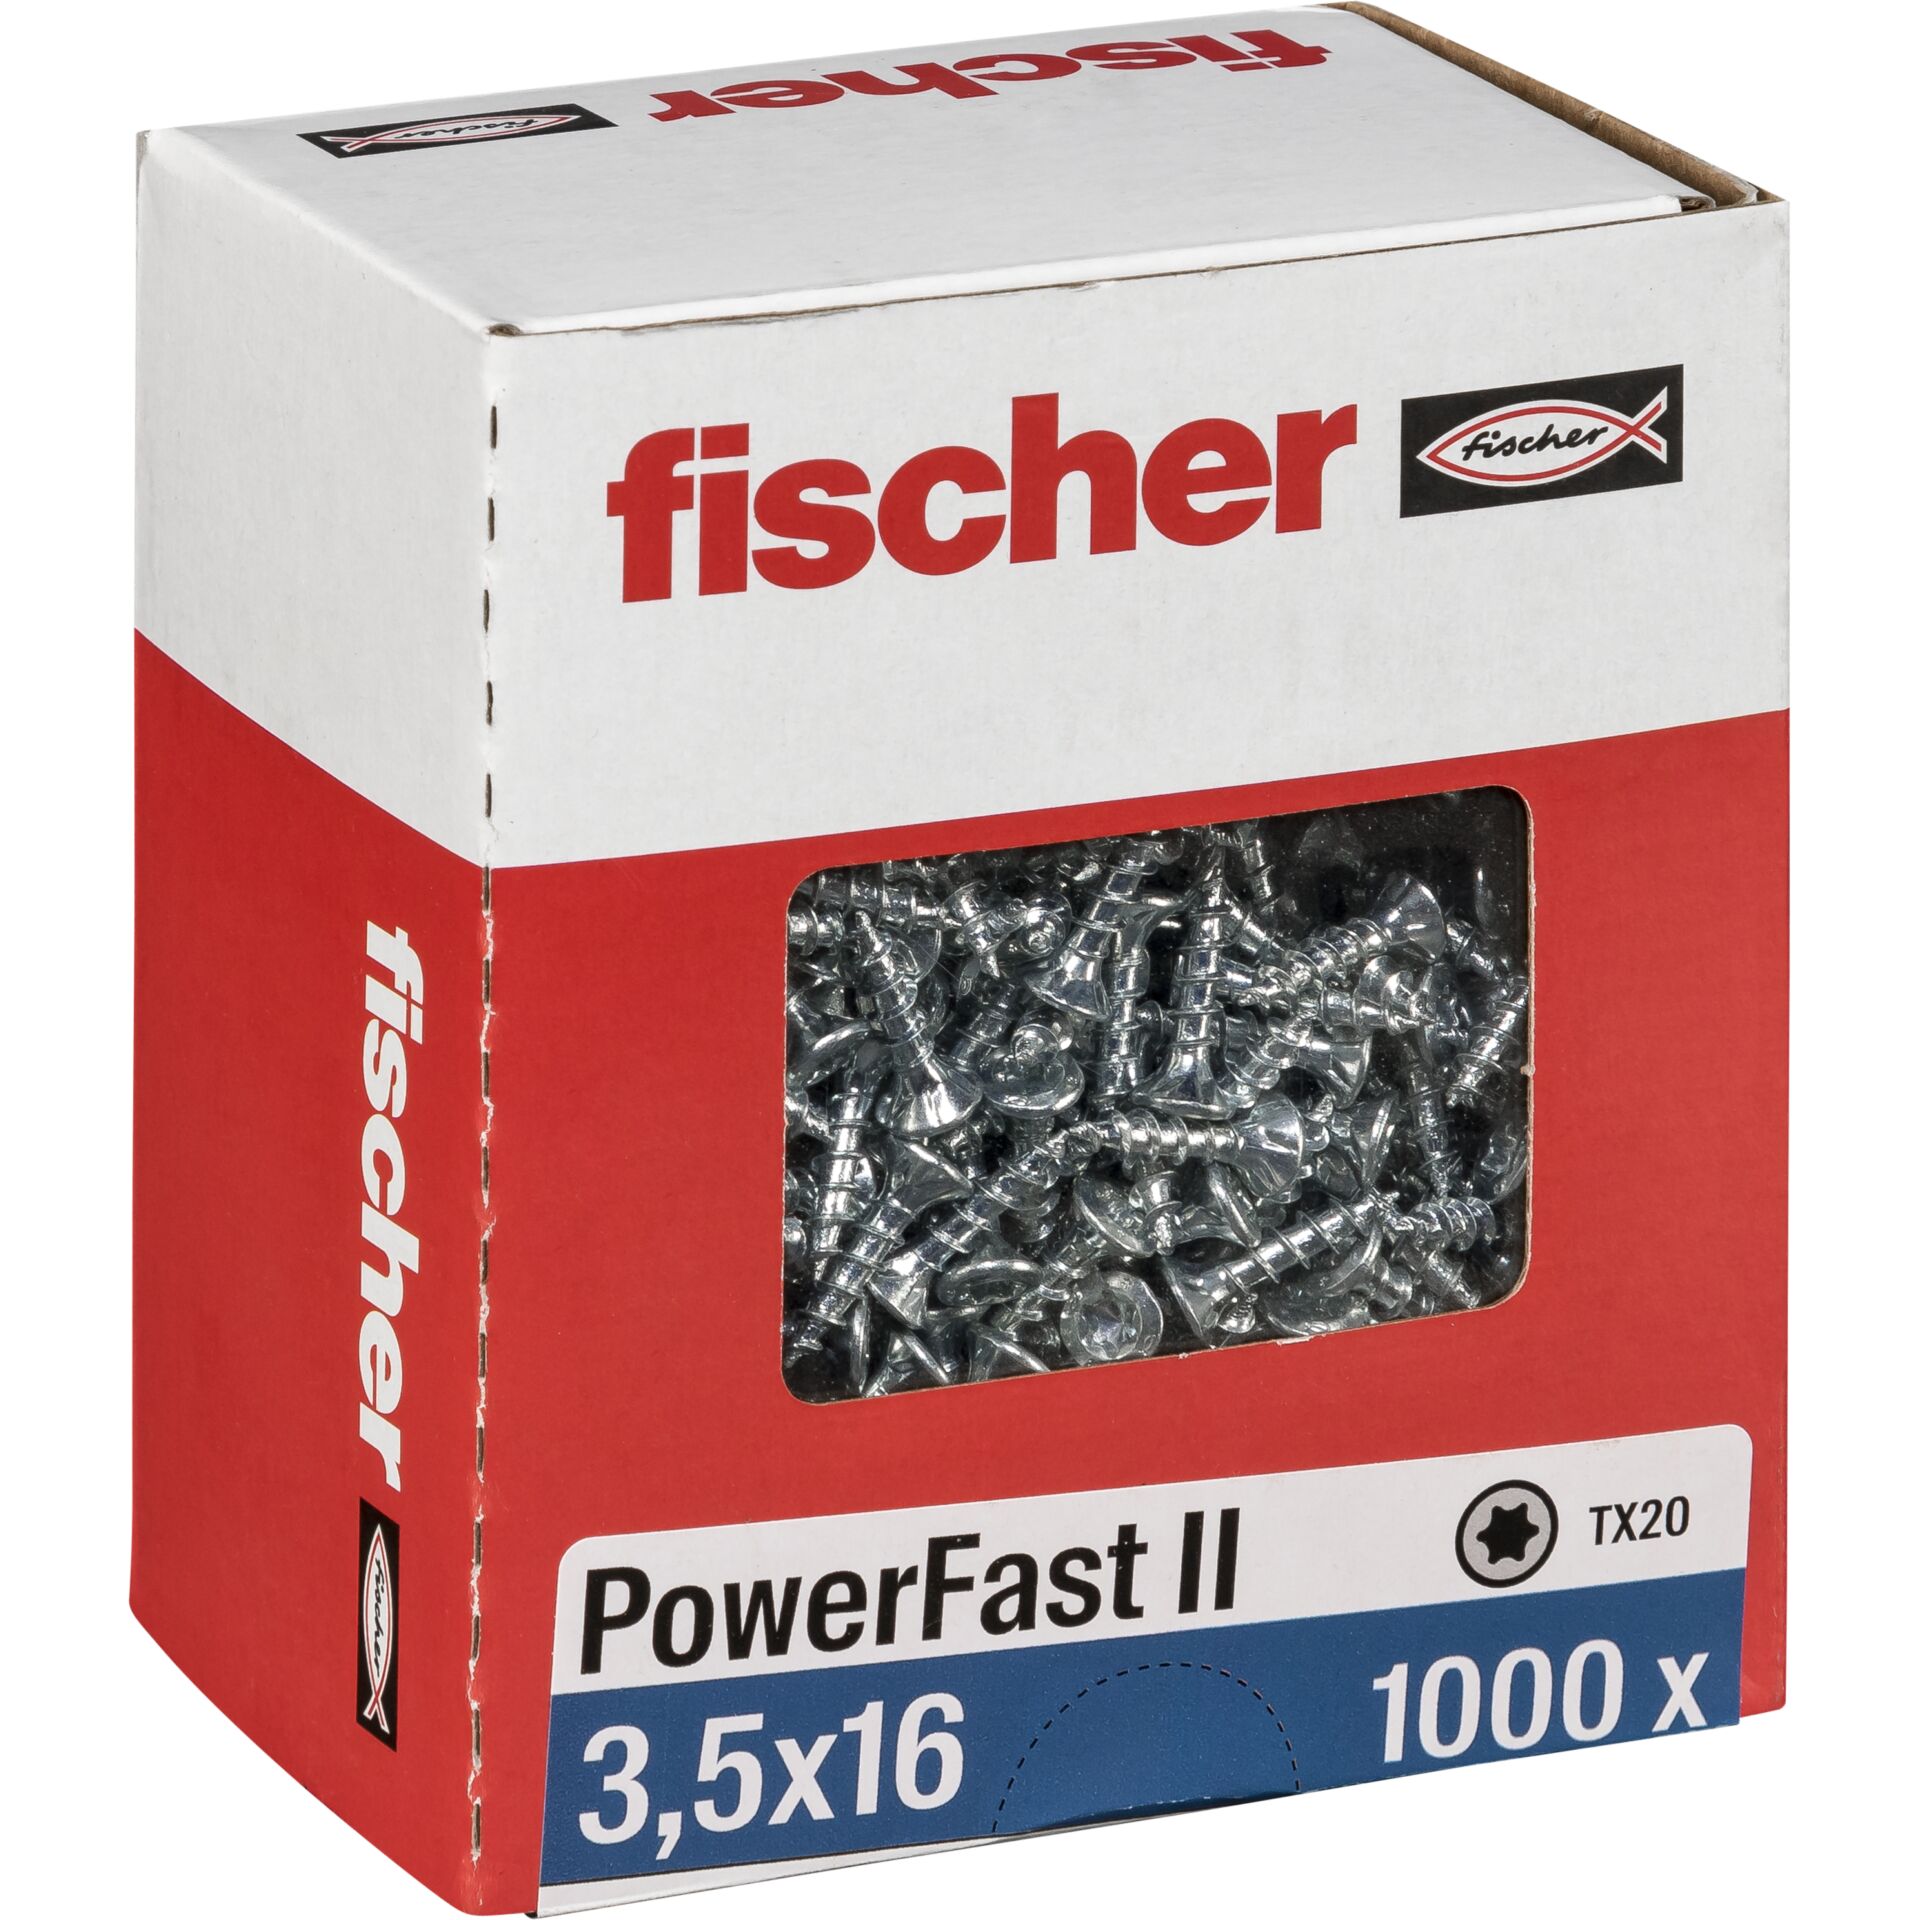 Fischer PowerFast II 3,5x16 SK TX VG blvz 1000